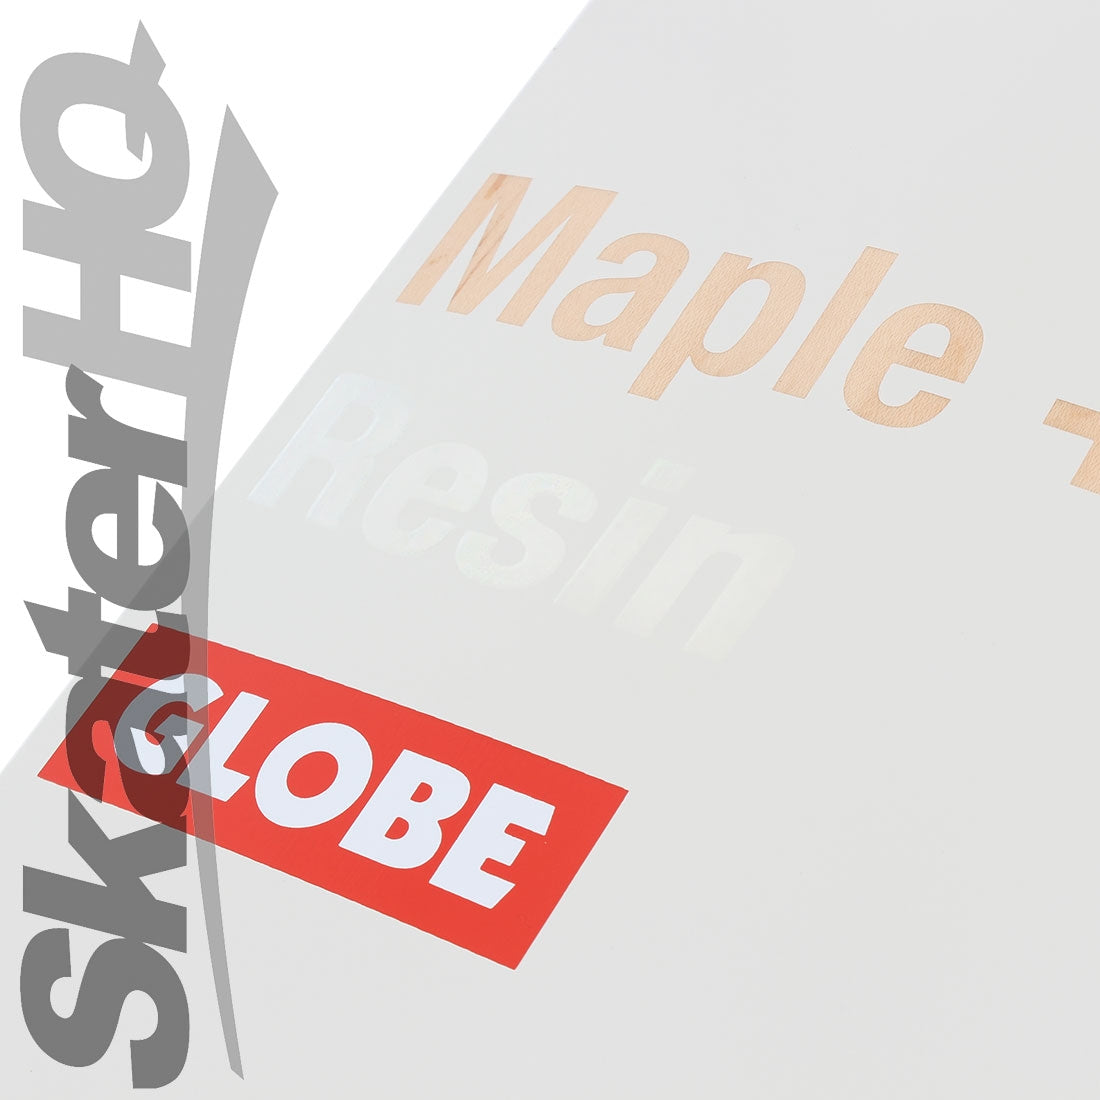 Globe G3 Bar 7.75 Deck - Opal Skateboard Decks Modern Street